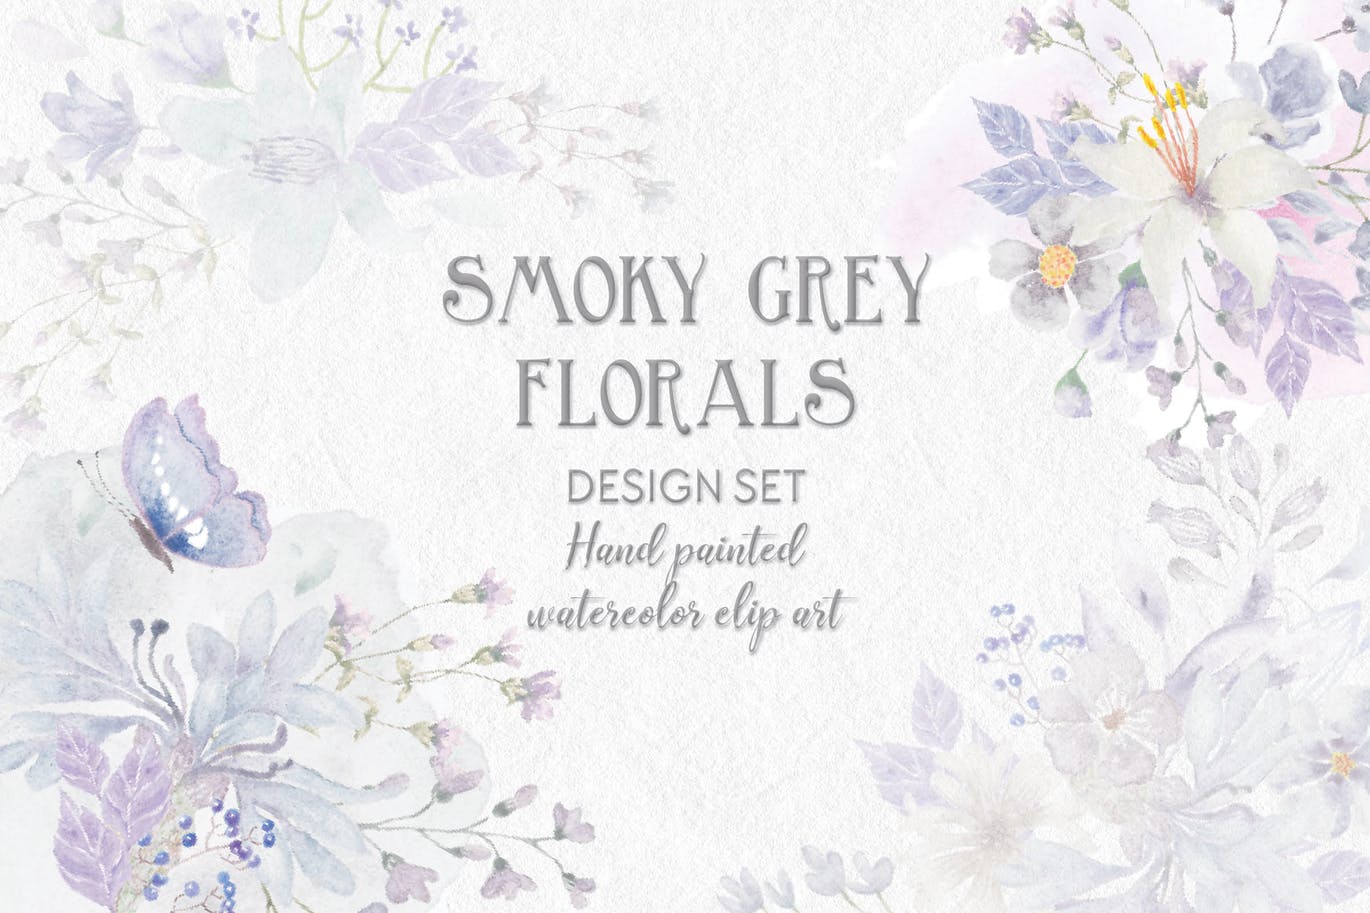 烟灰色水彩花卉手绘图案PNG素材 Smoky Grey Florals Watercolor Design Set插图